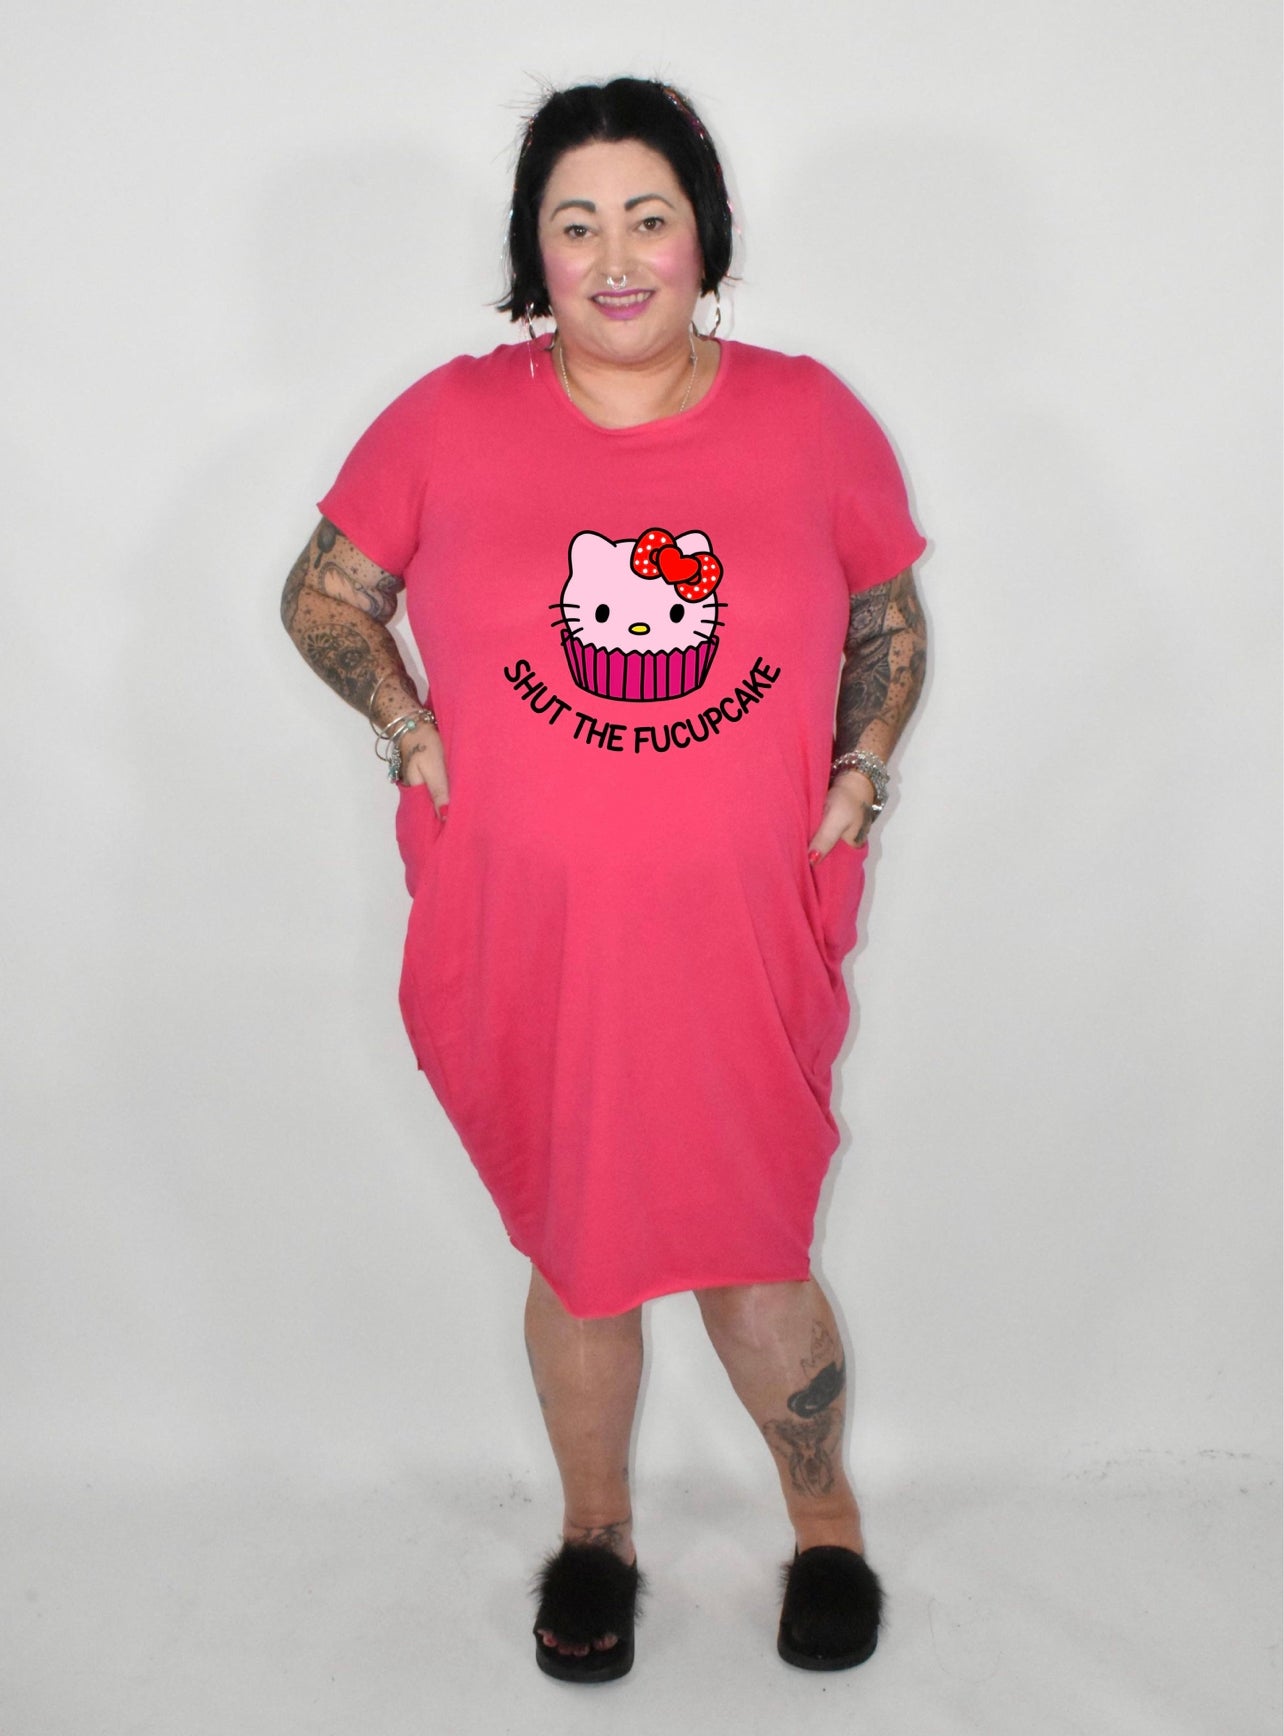 Hot Pink "Shut The Fucupcake” Kitty T-shirt Dress